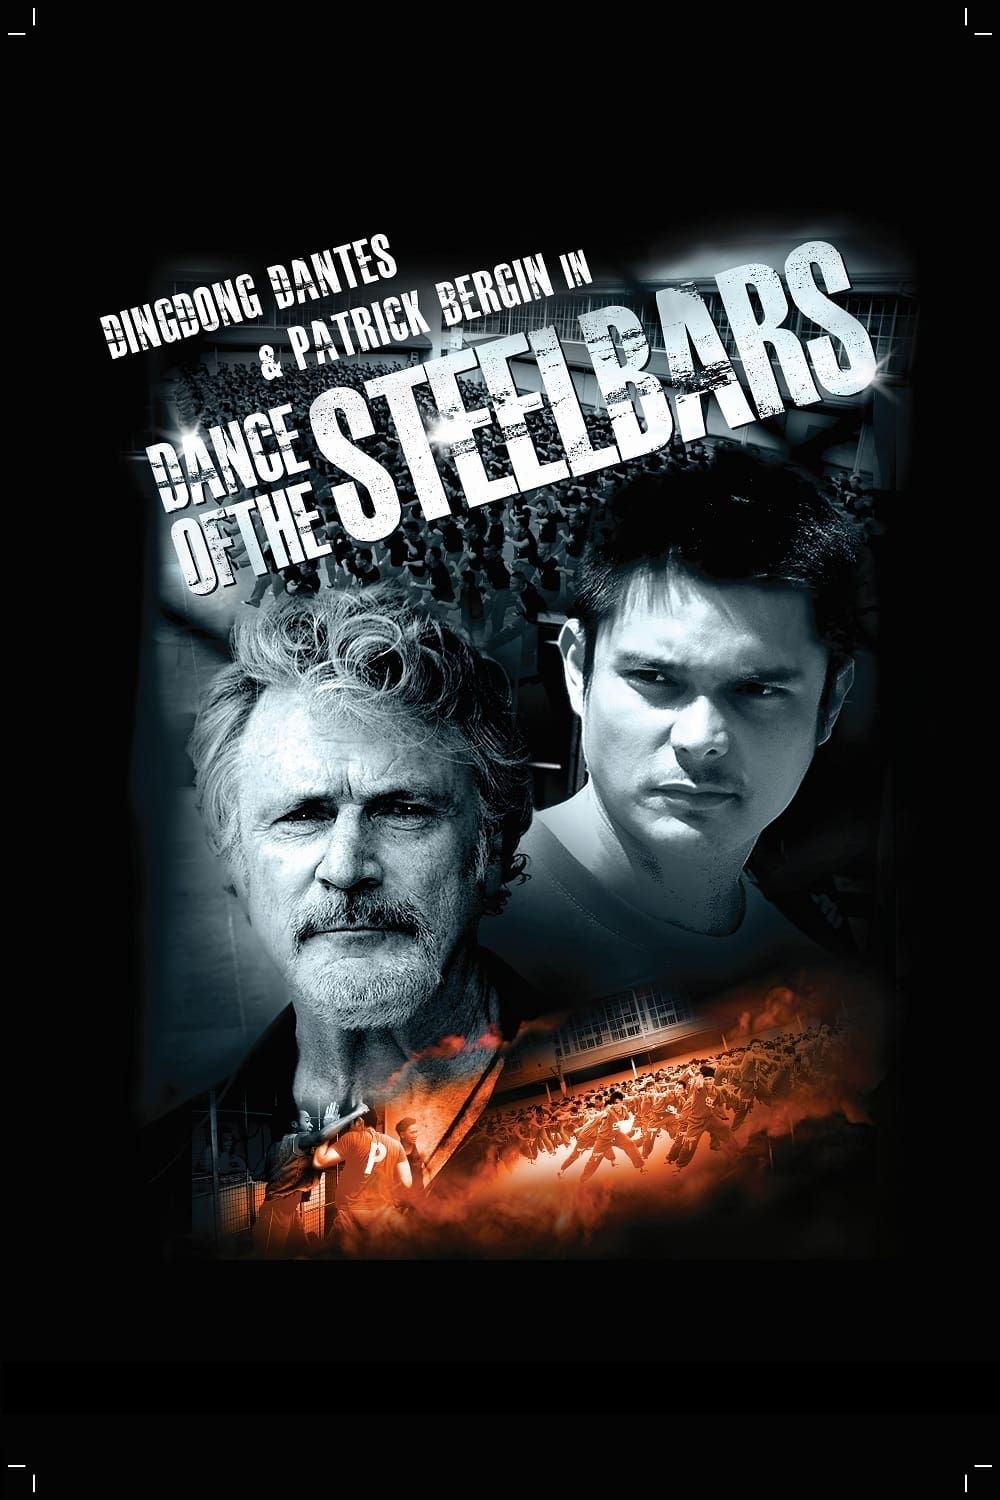 Dance of the Steel Bars